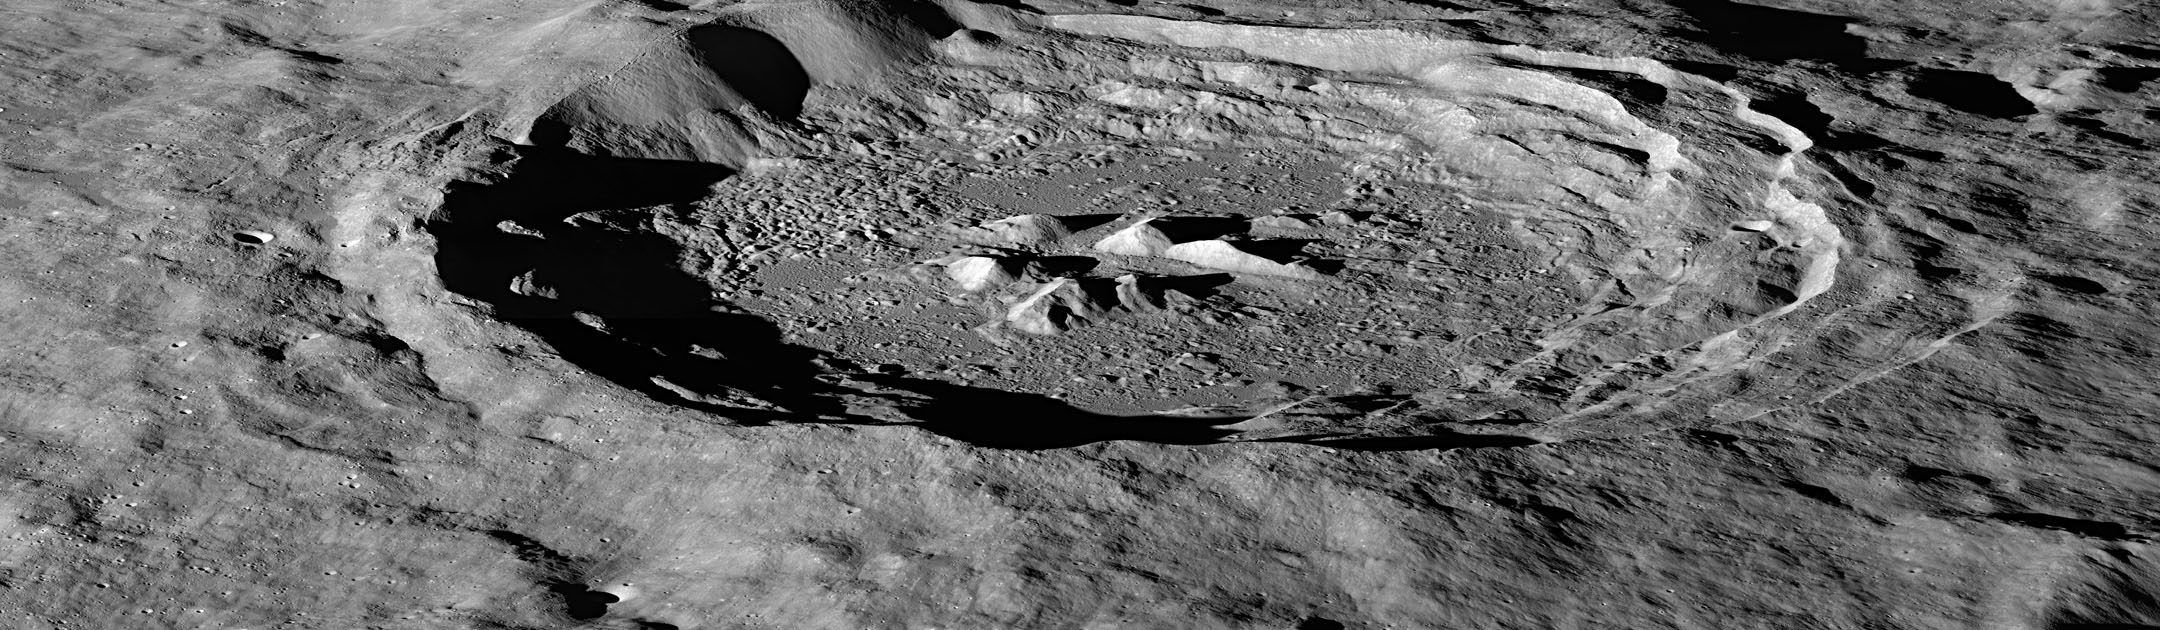 Корабль на поверхности луны. Кратер Терешковой на Луне. Кратер Герцшпрунг на Луне. Кратер на обратной стороне Луны. Посидоний (лунный кратер).